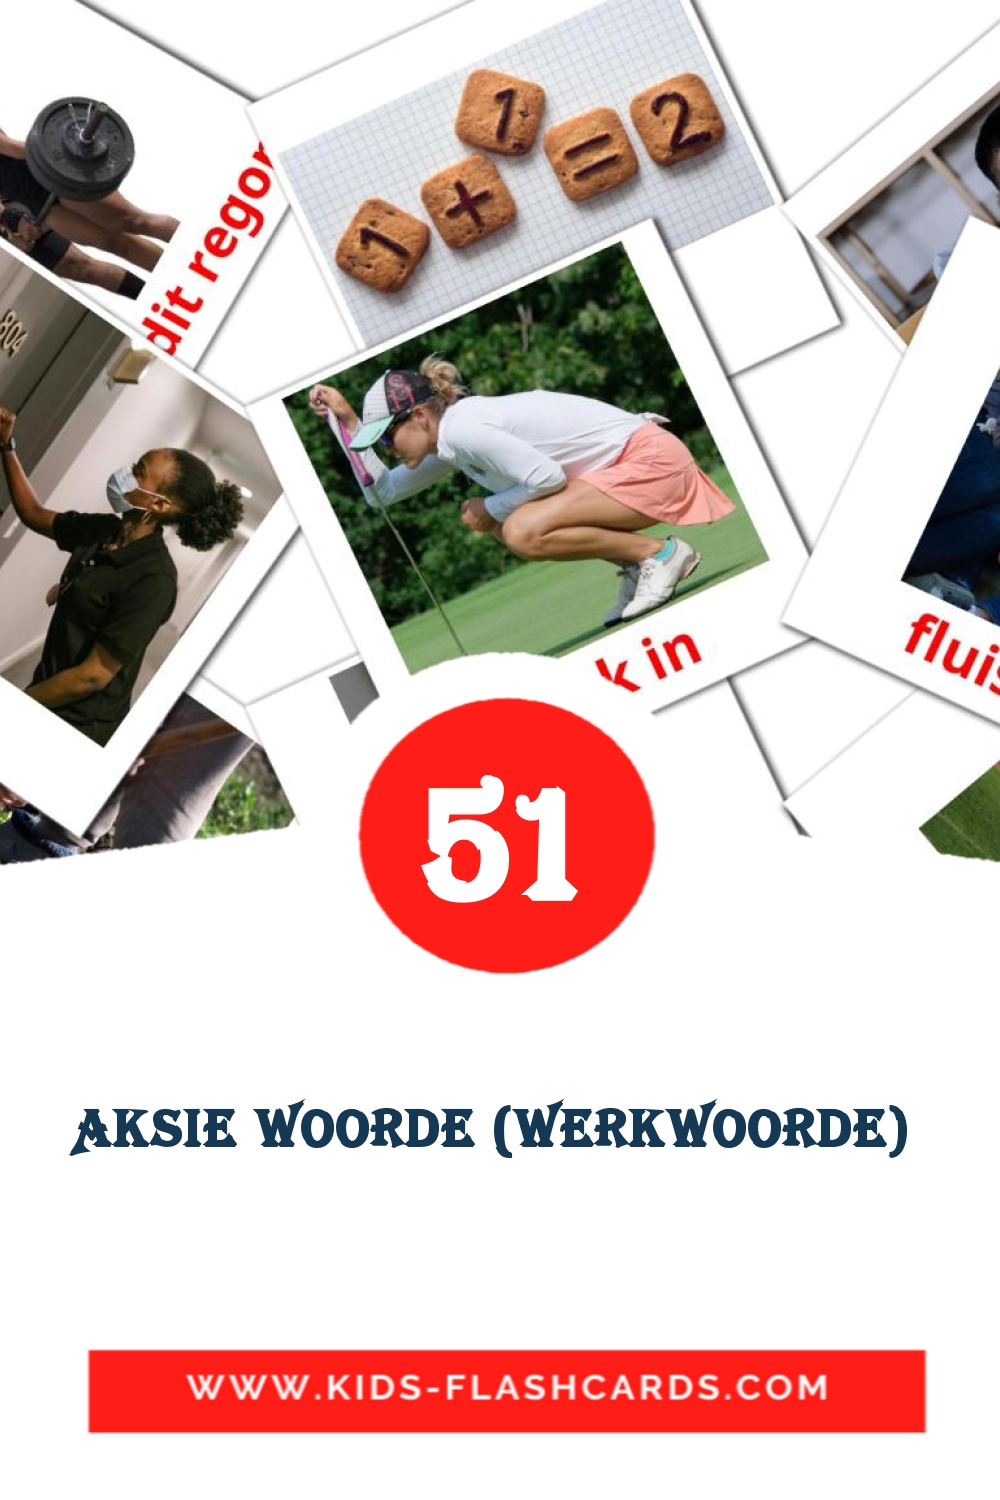 54 Aksie woorde (werkwoorde)  Picture Cards for Kindergarden in afrikaans